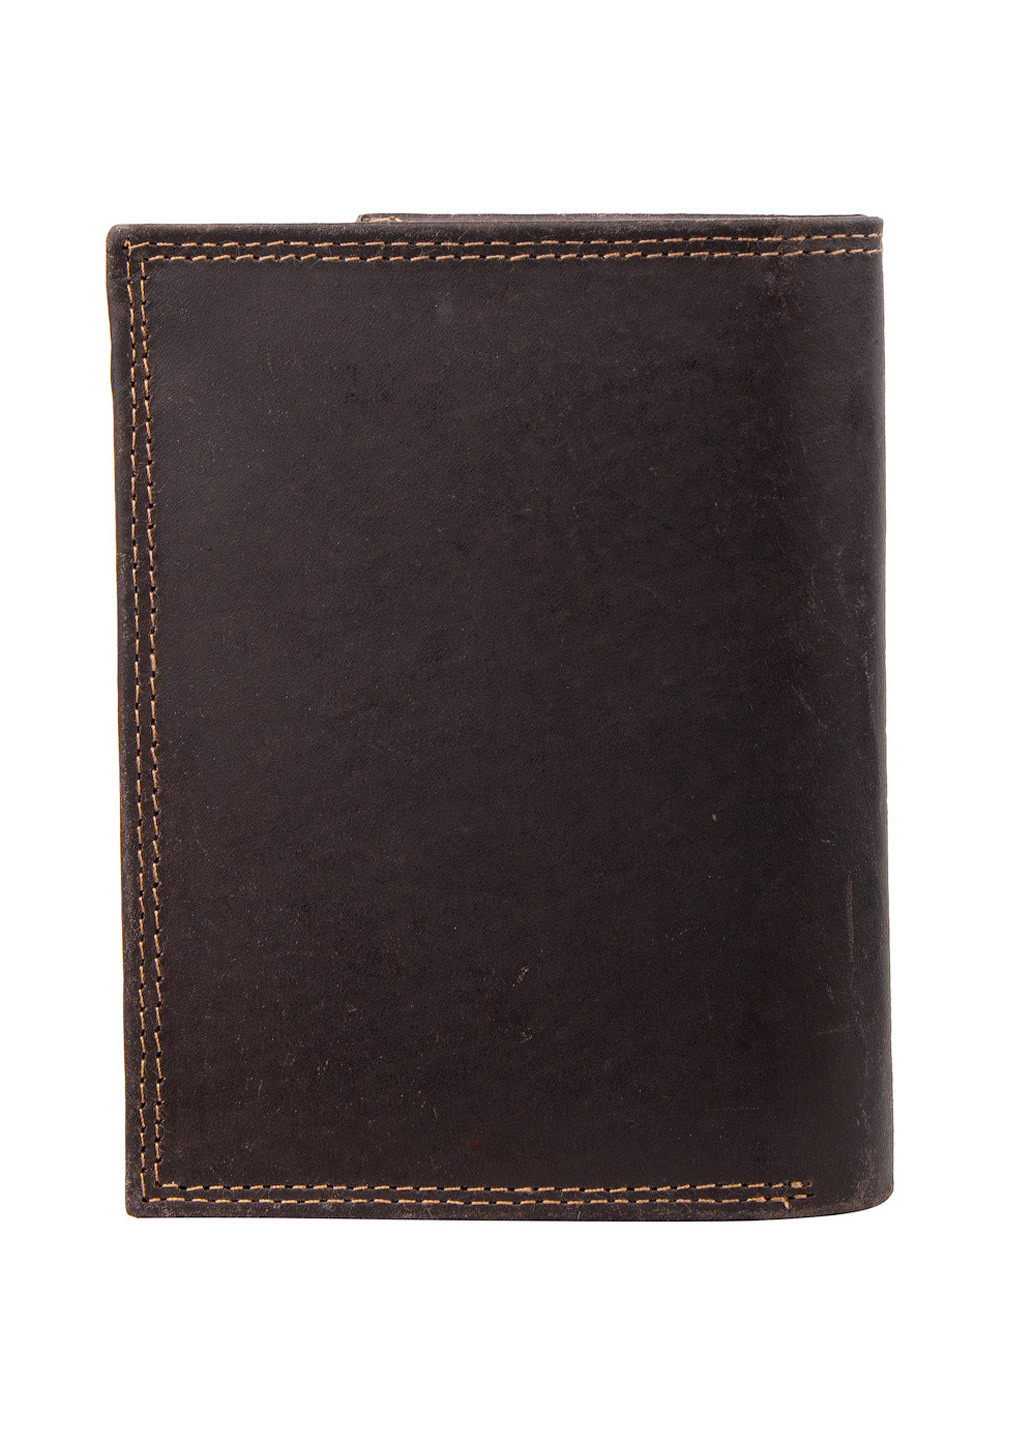 Мужской кожаный кошелек 10х13х2,5 см Buffalo Wild (195770958)